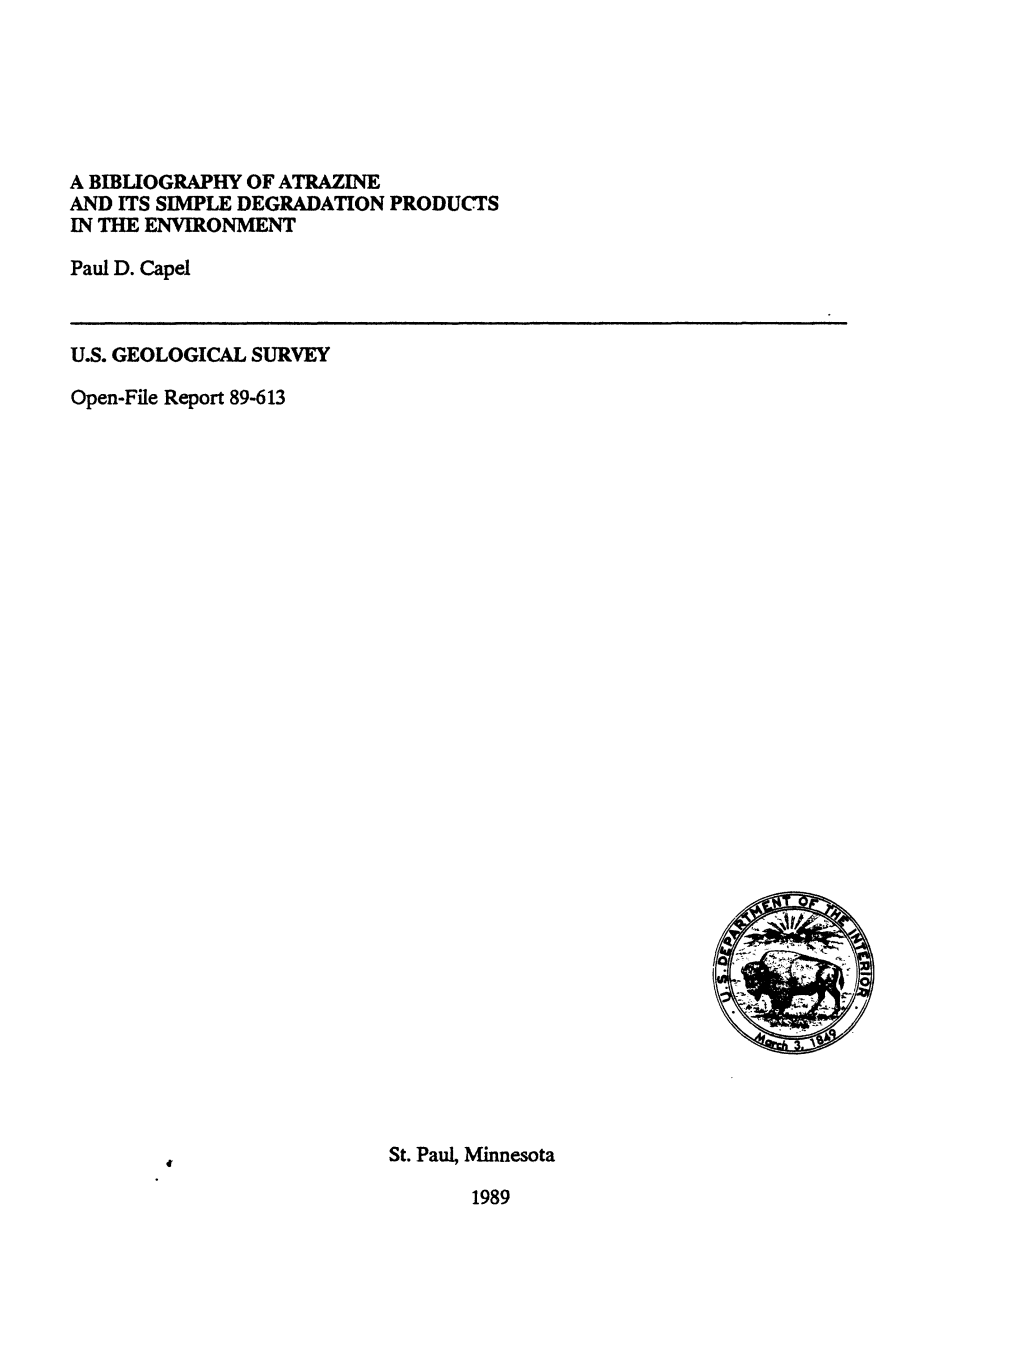 Paul D. Capel Open-File Report 89-613 St. Paul, Minnesota 1989